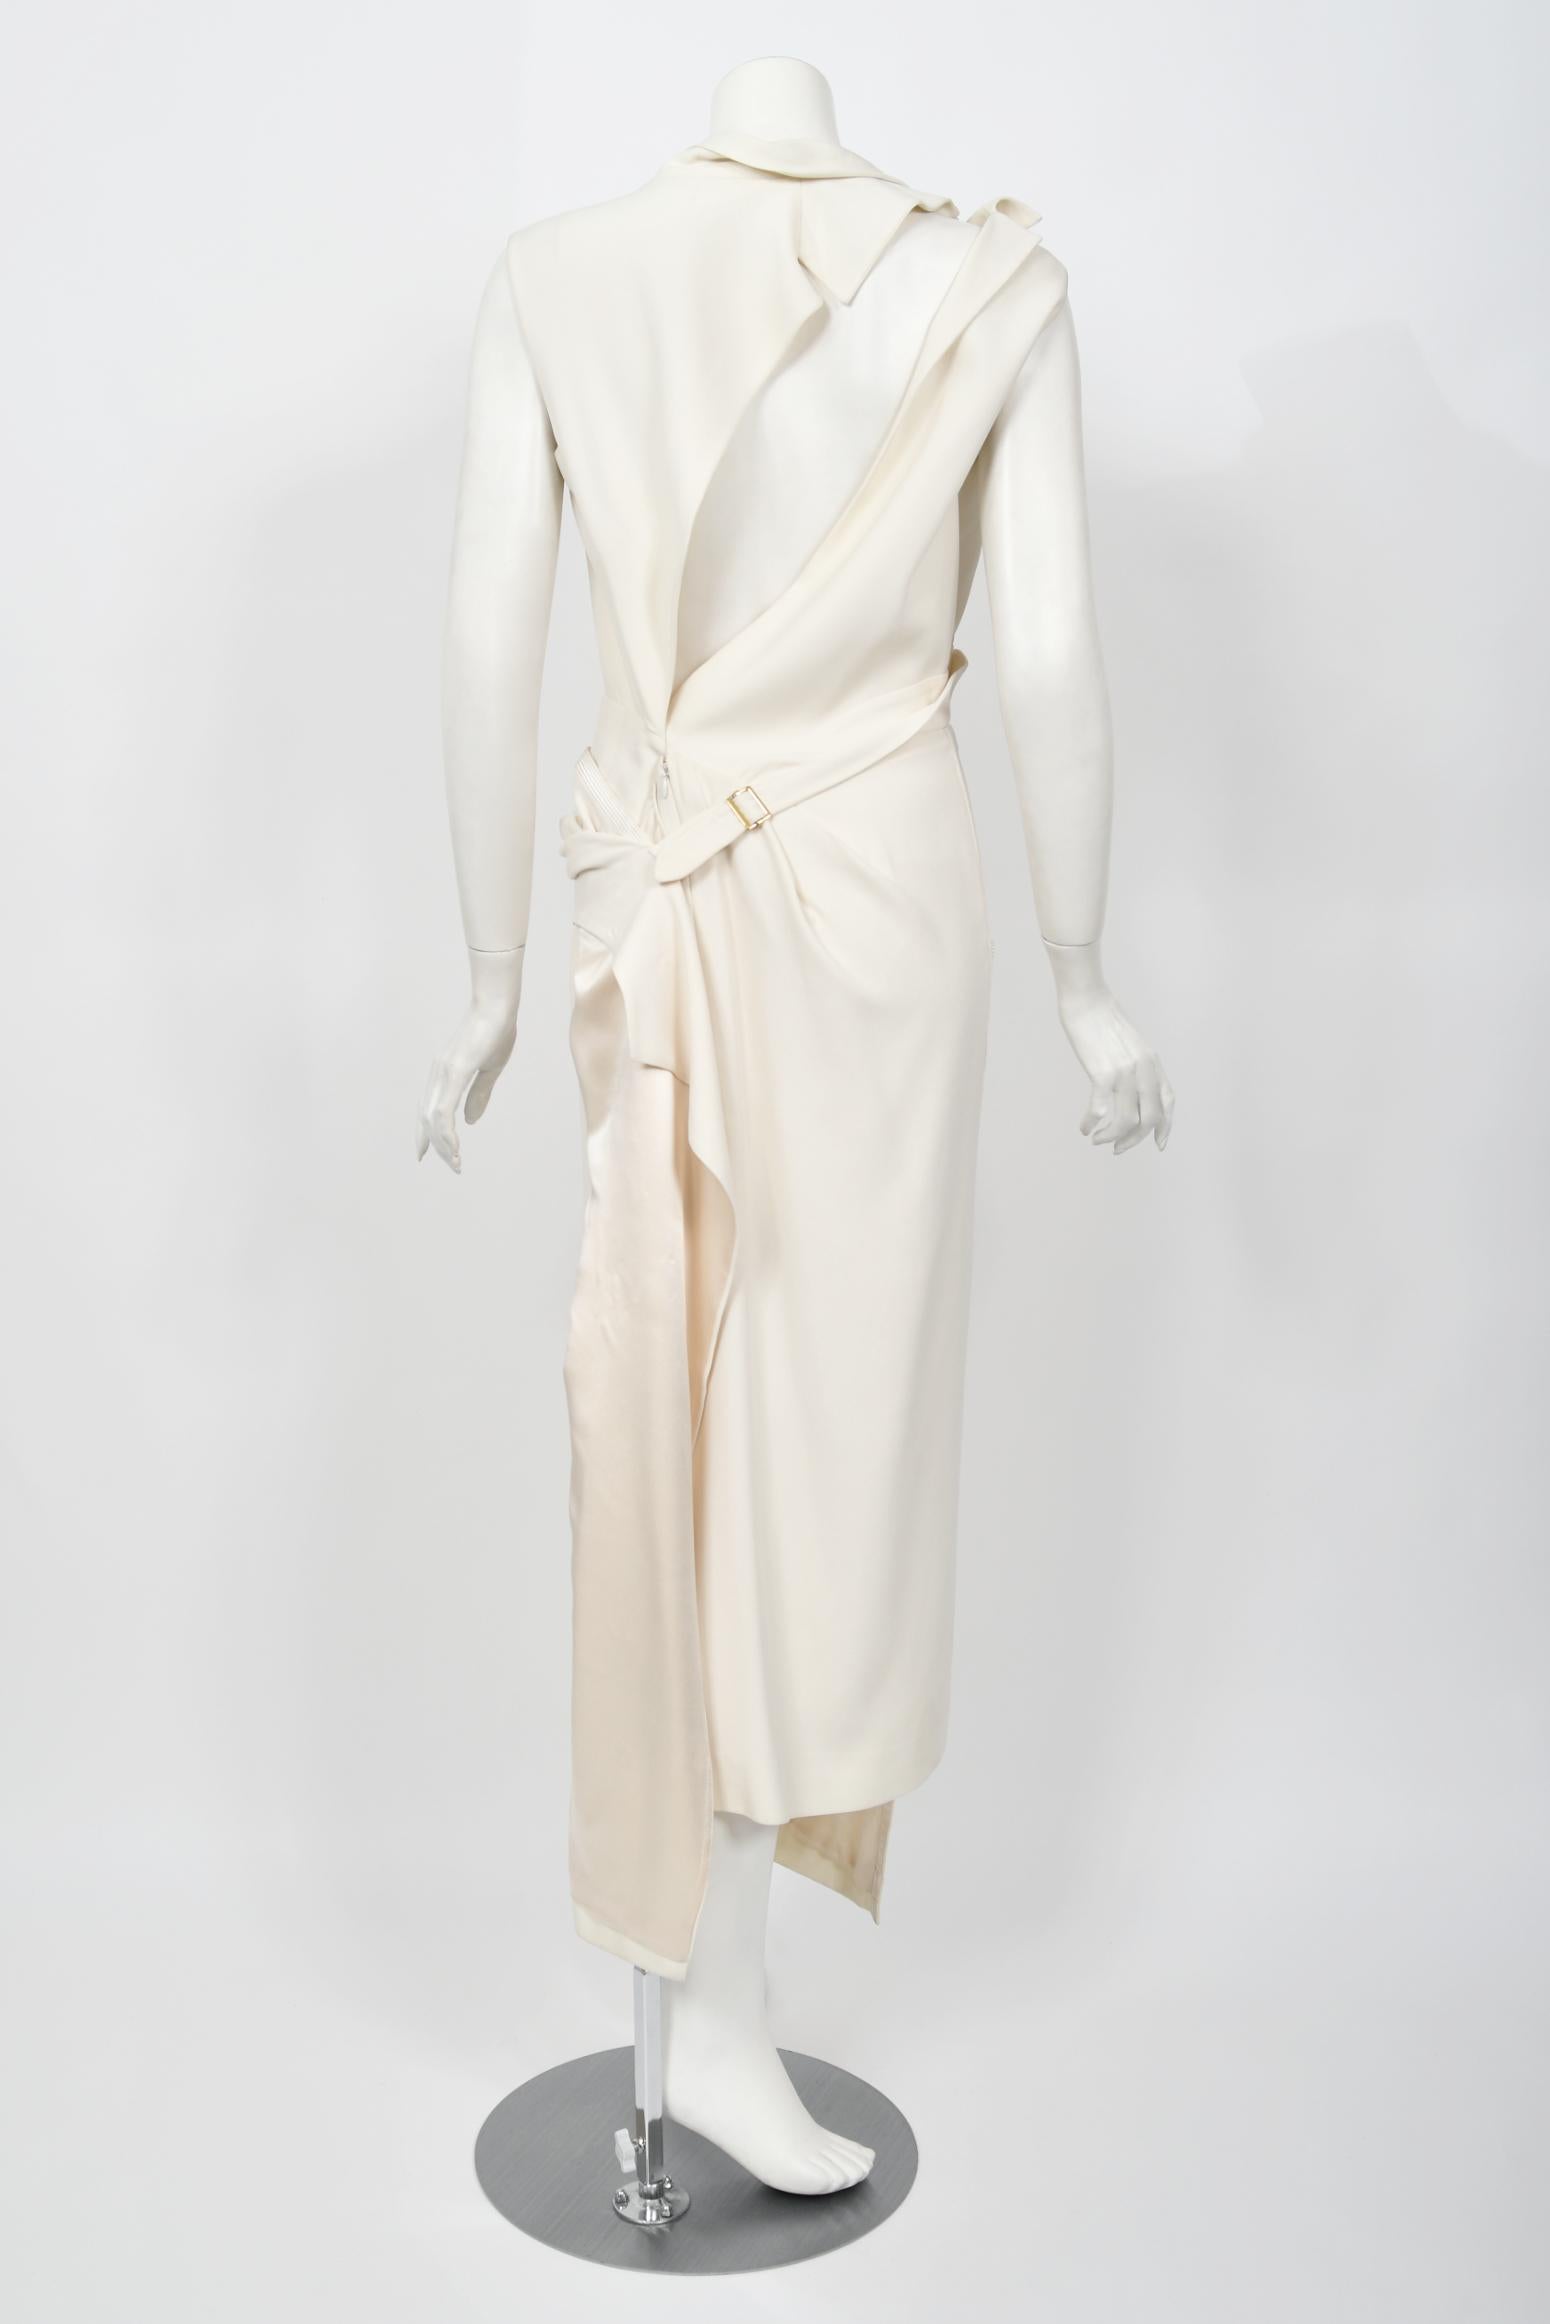 2000 Christian Dior by John Galliano Ivory Crepe Cut-Out Asymmetric Draped Dress 14